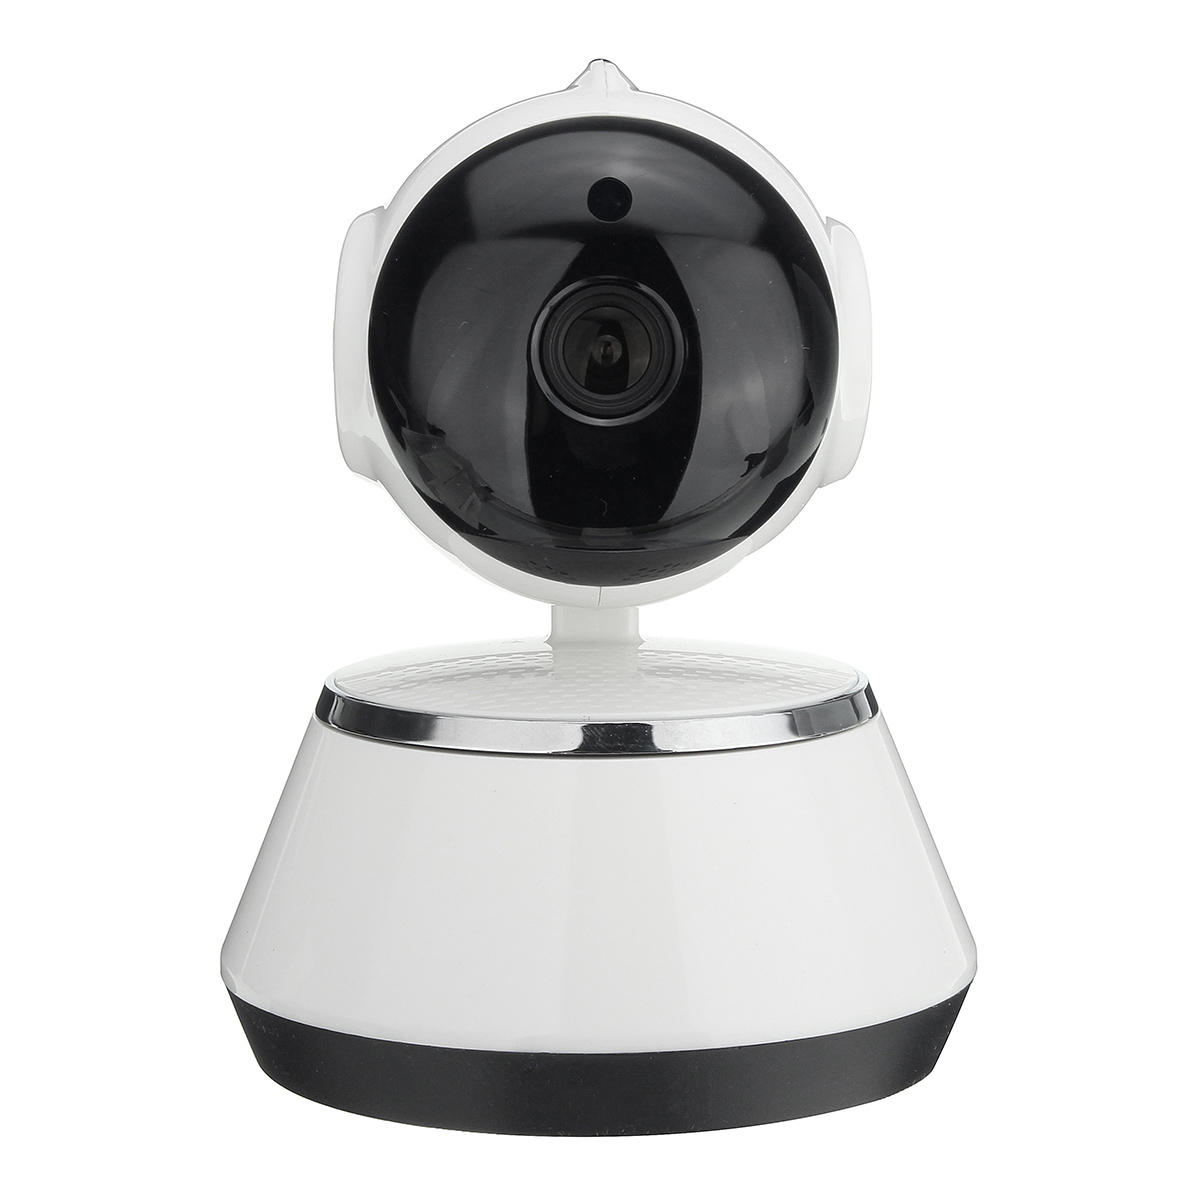 720 P Wireless Security Network CCTV IP Camera Night Vision WIFIWeb Cam